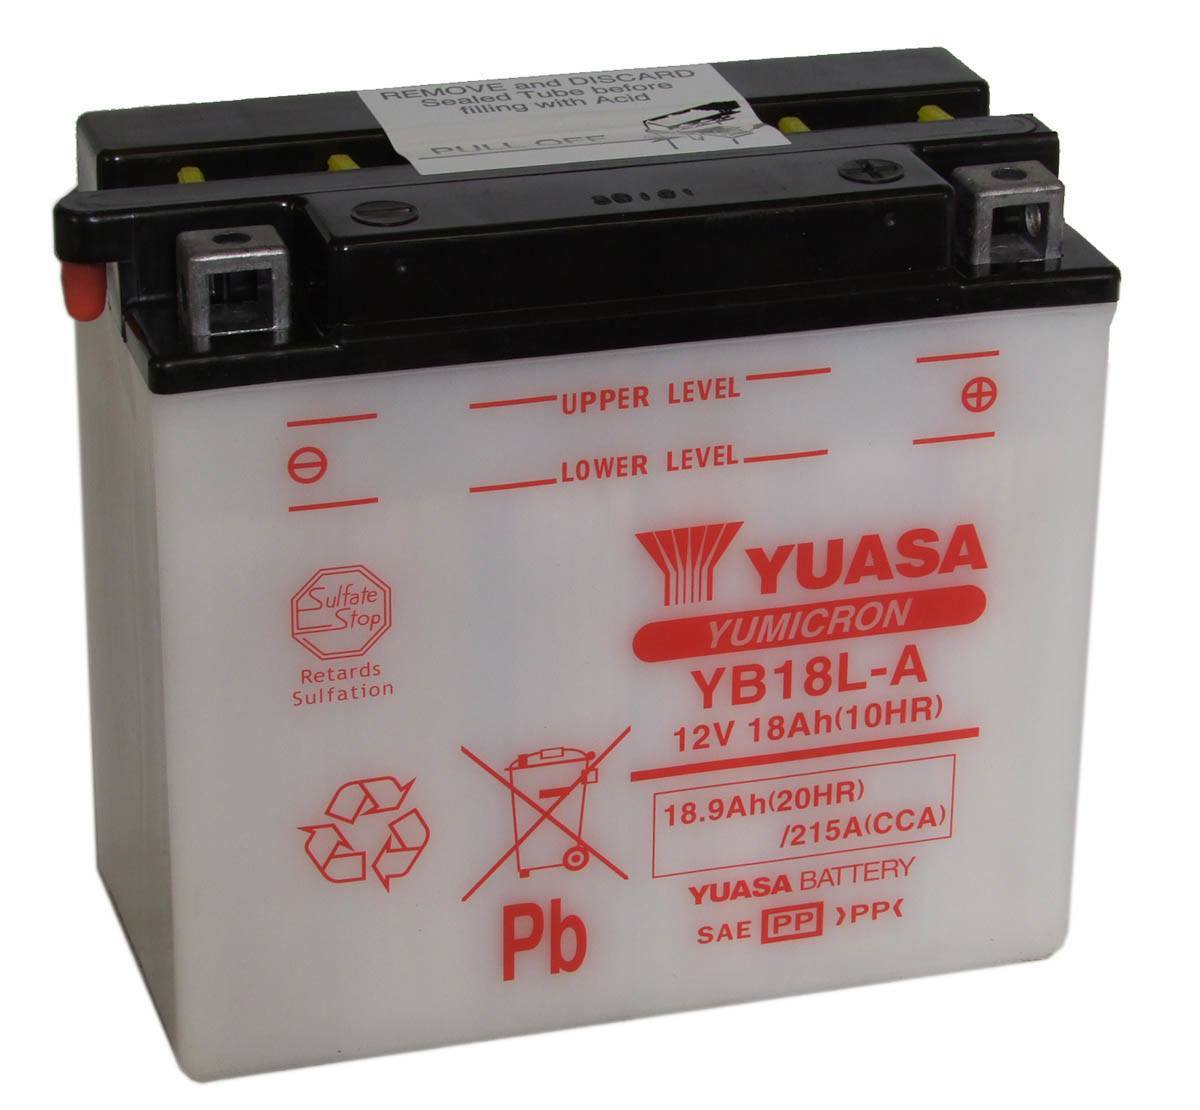 Yuasa YB18L-A 12V Motorbike Battery